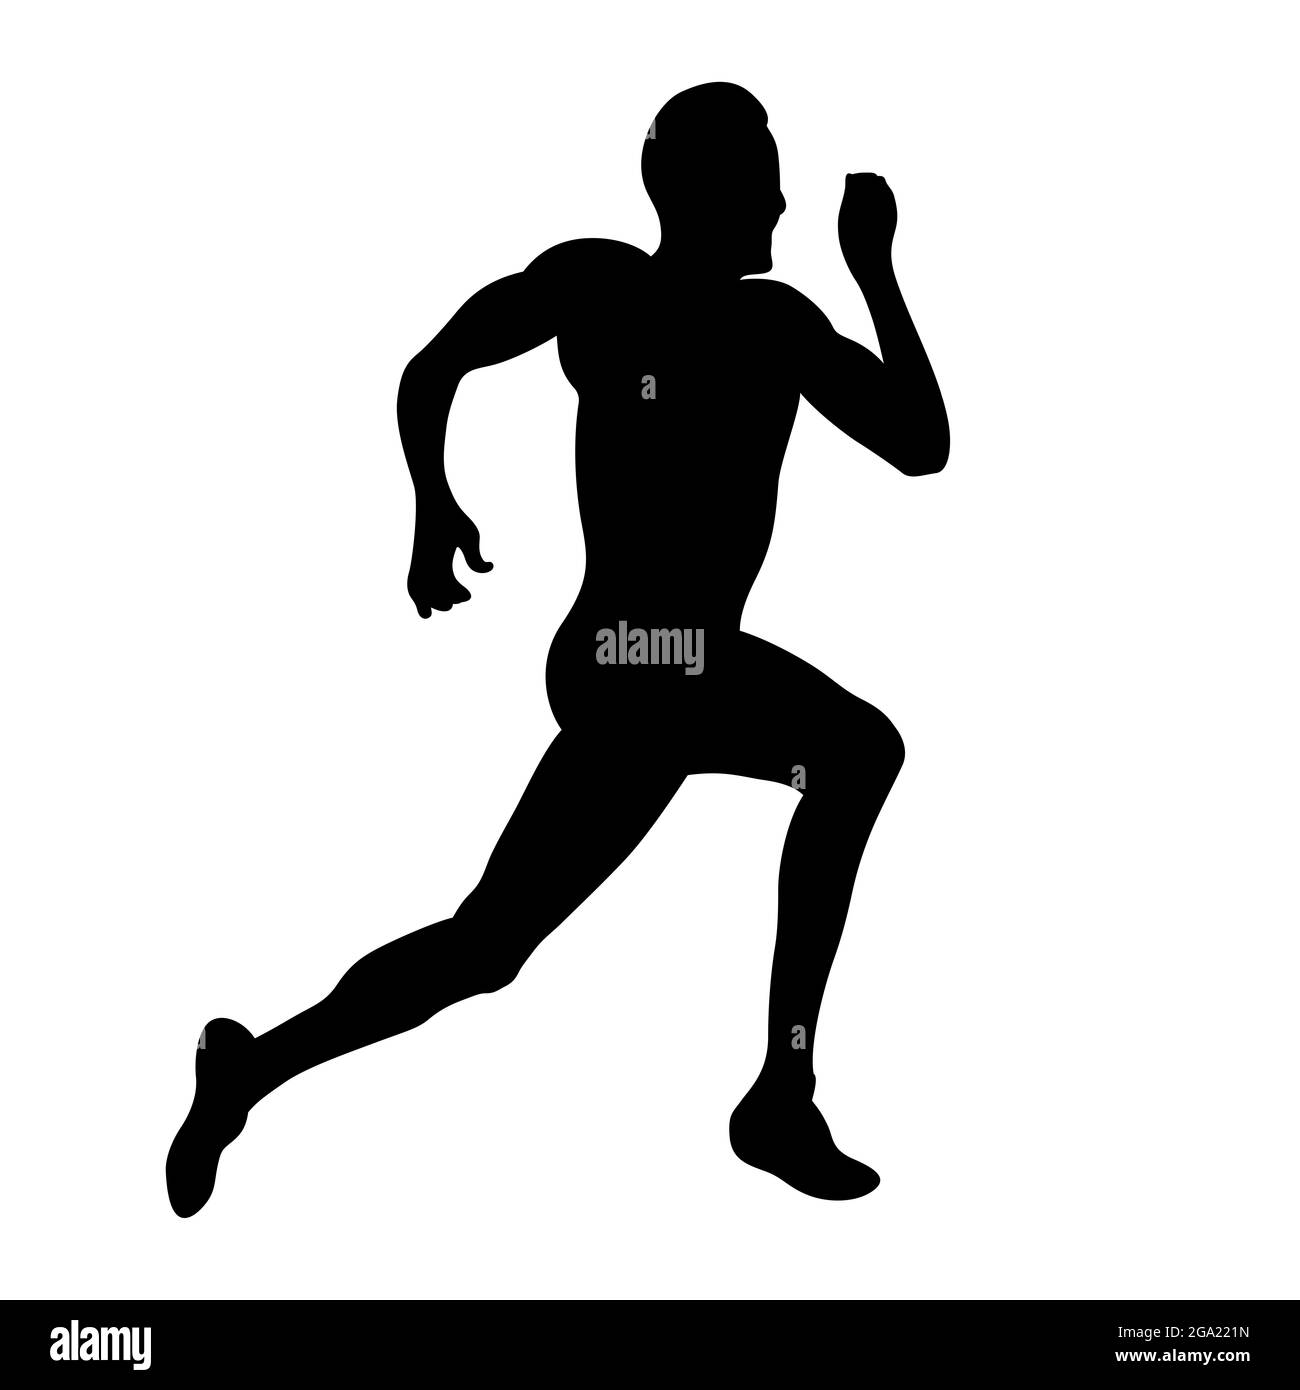 male athlete running sprint race black silhouette Stock Photo